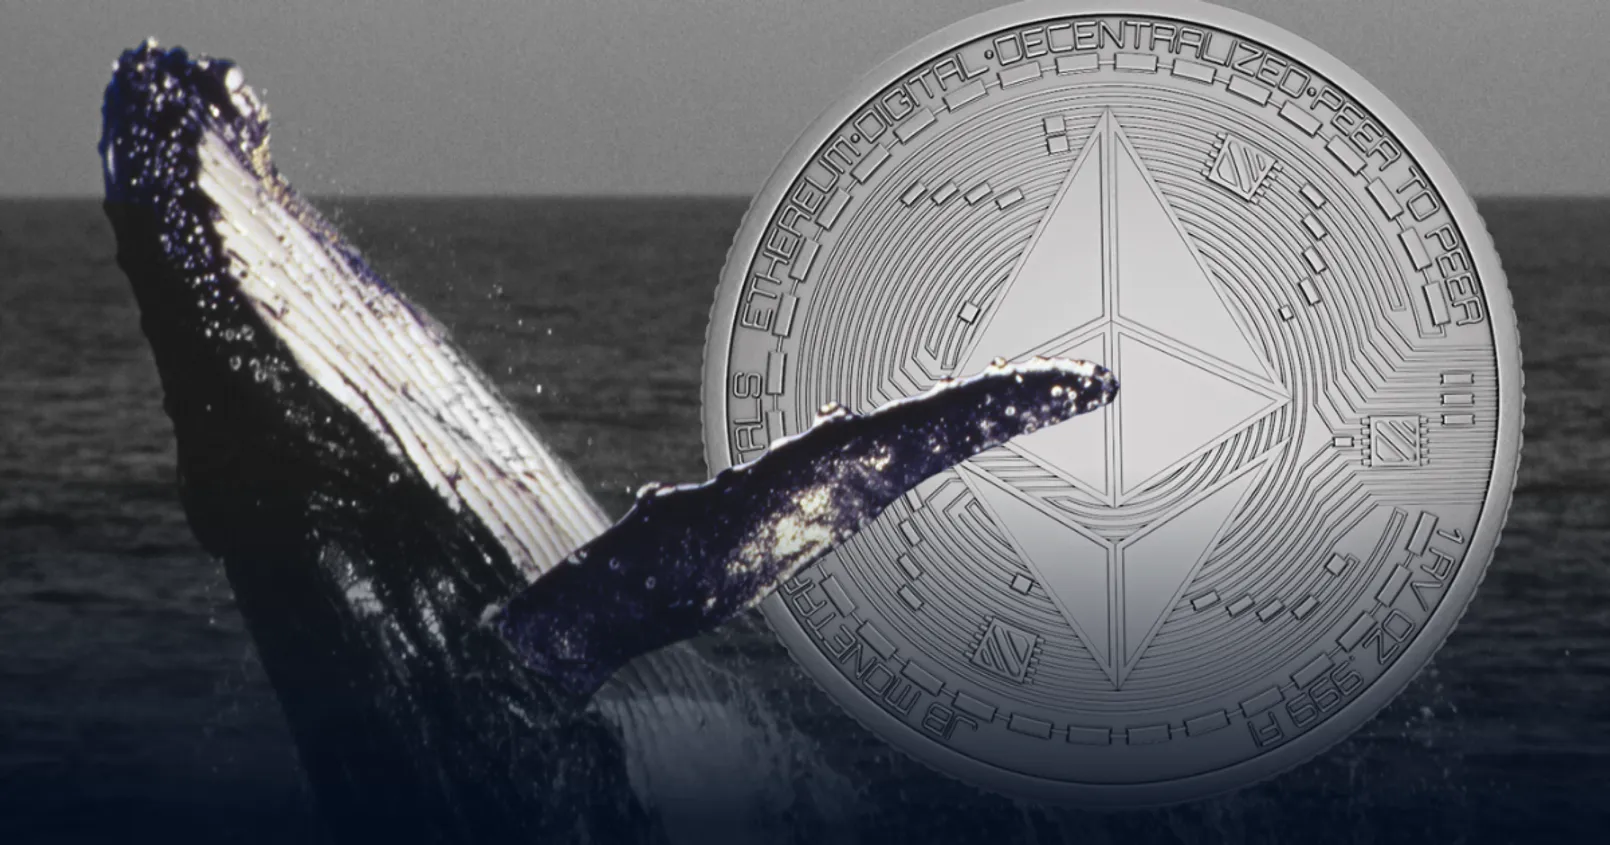 Whale Alert เตือน! พบวาฬ 'Ethereum' โอนเหรียญ 149,999 ETH